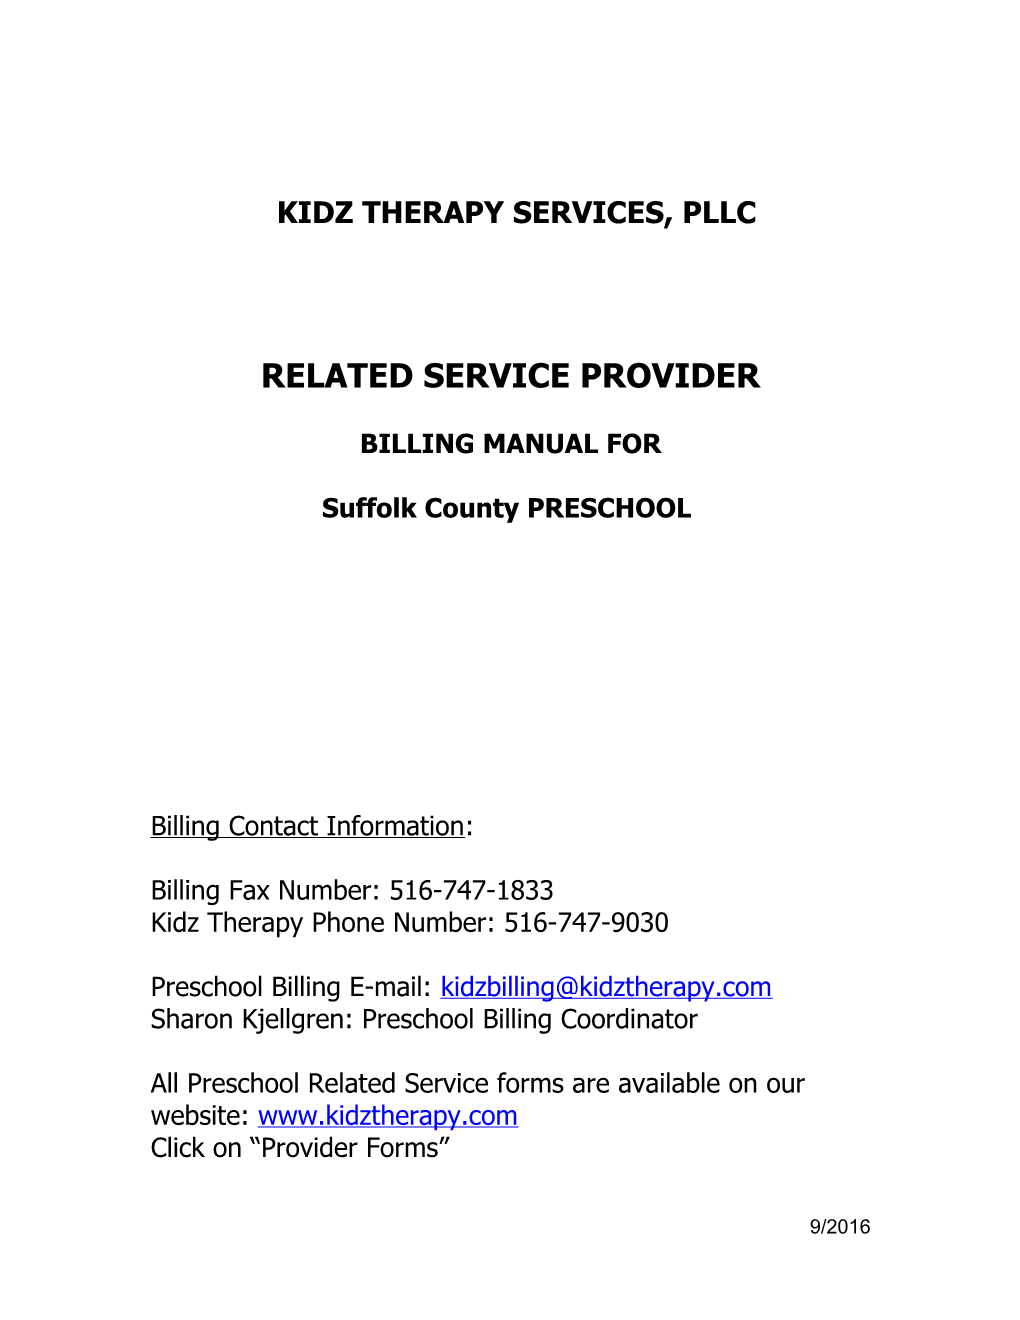 Kidz Therapy Services, Llc